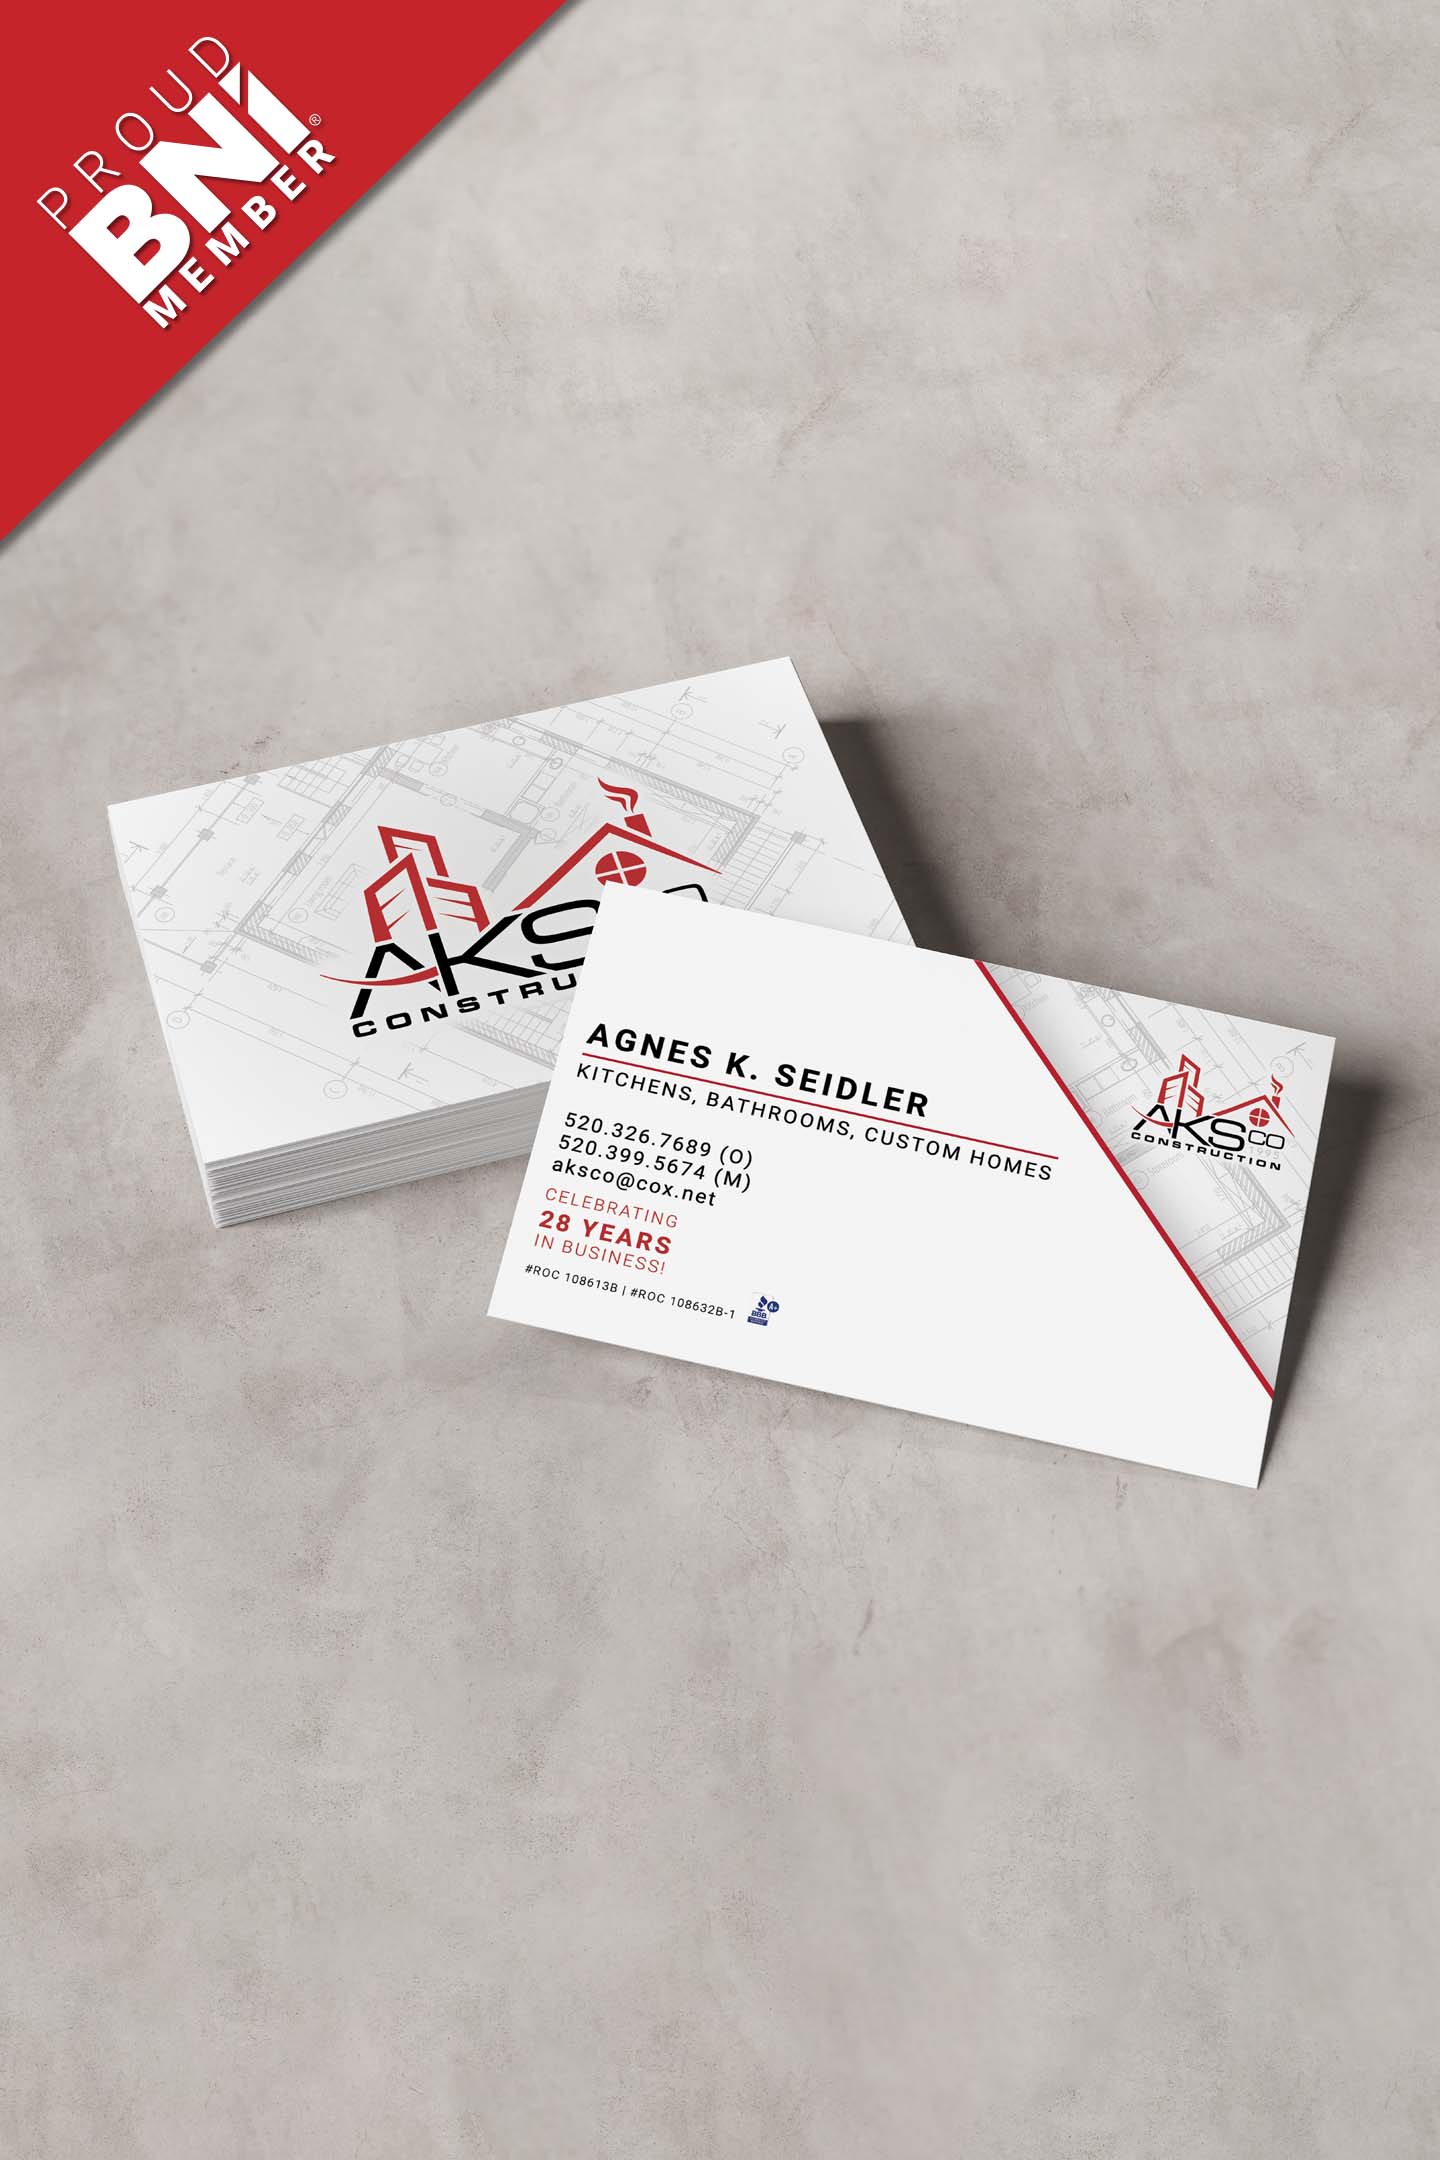 AKSCO Construction - Business Cards